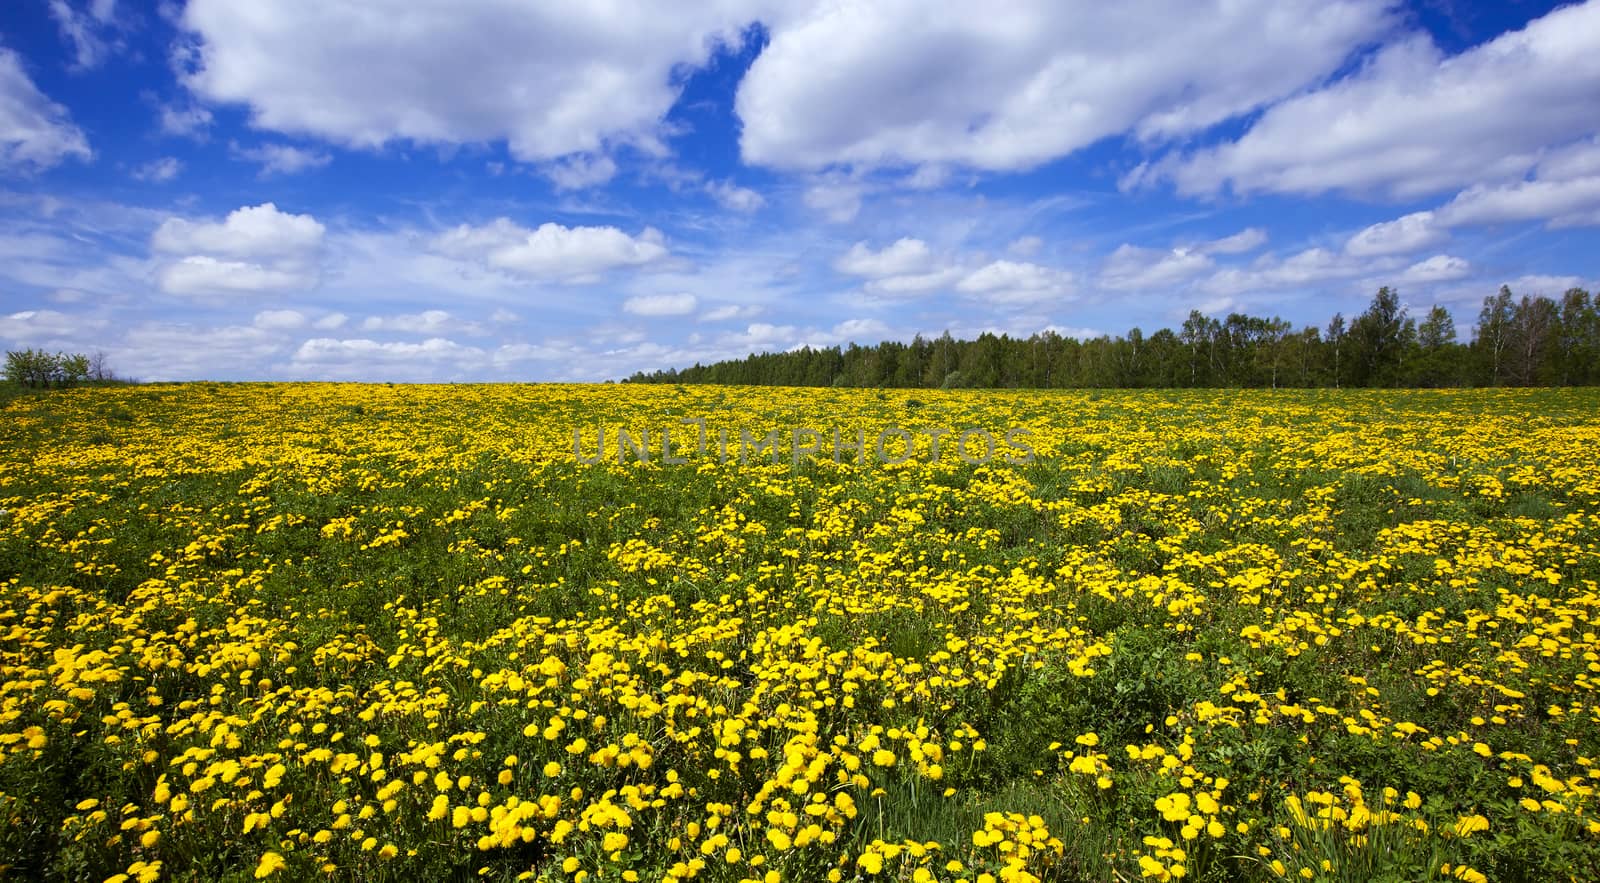 field of dandelions - summertime of year